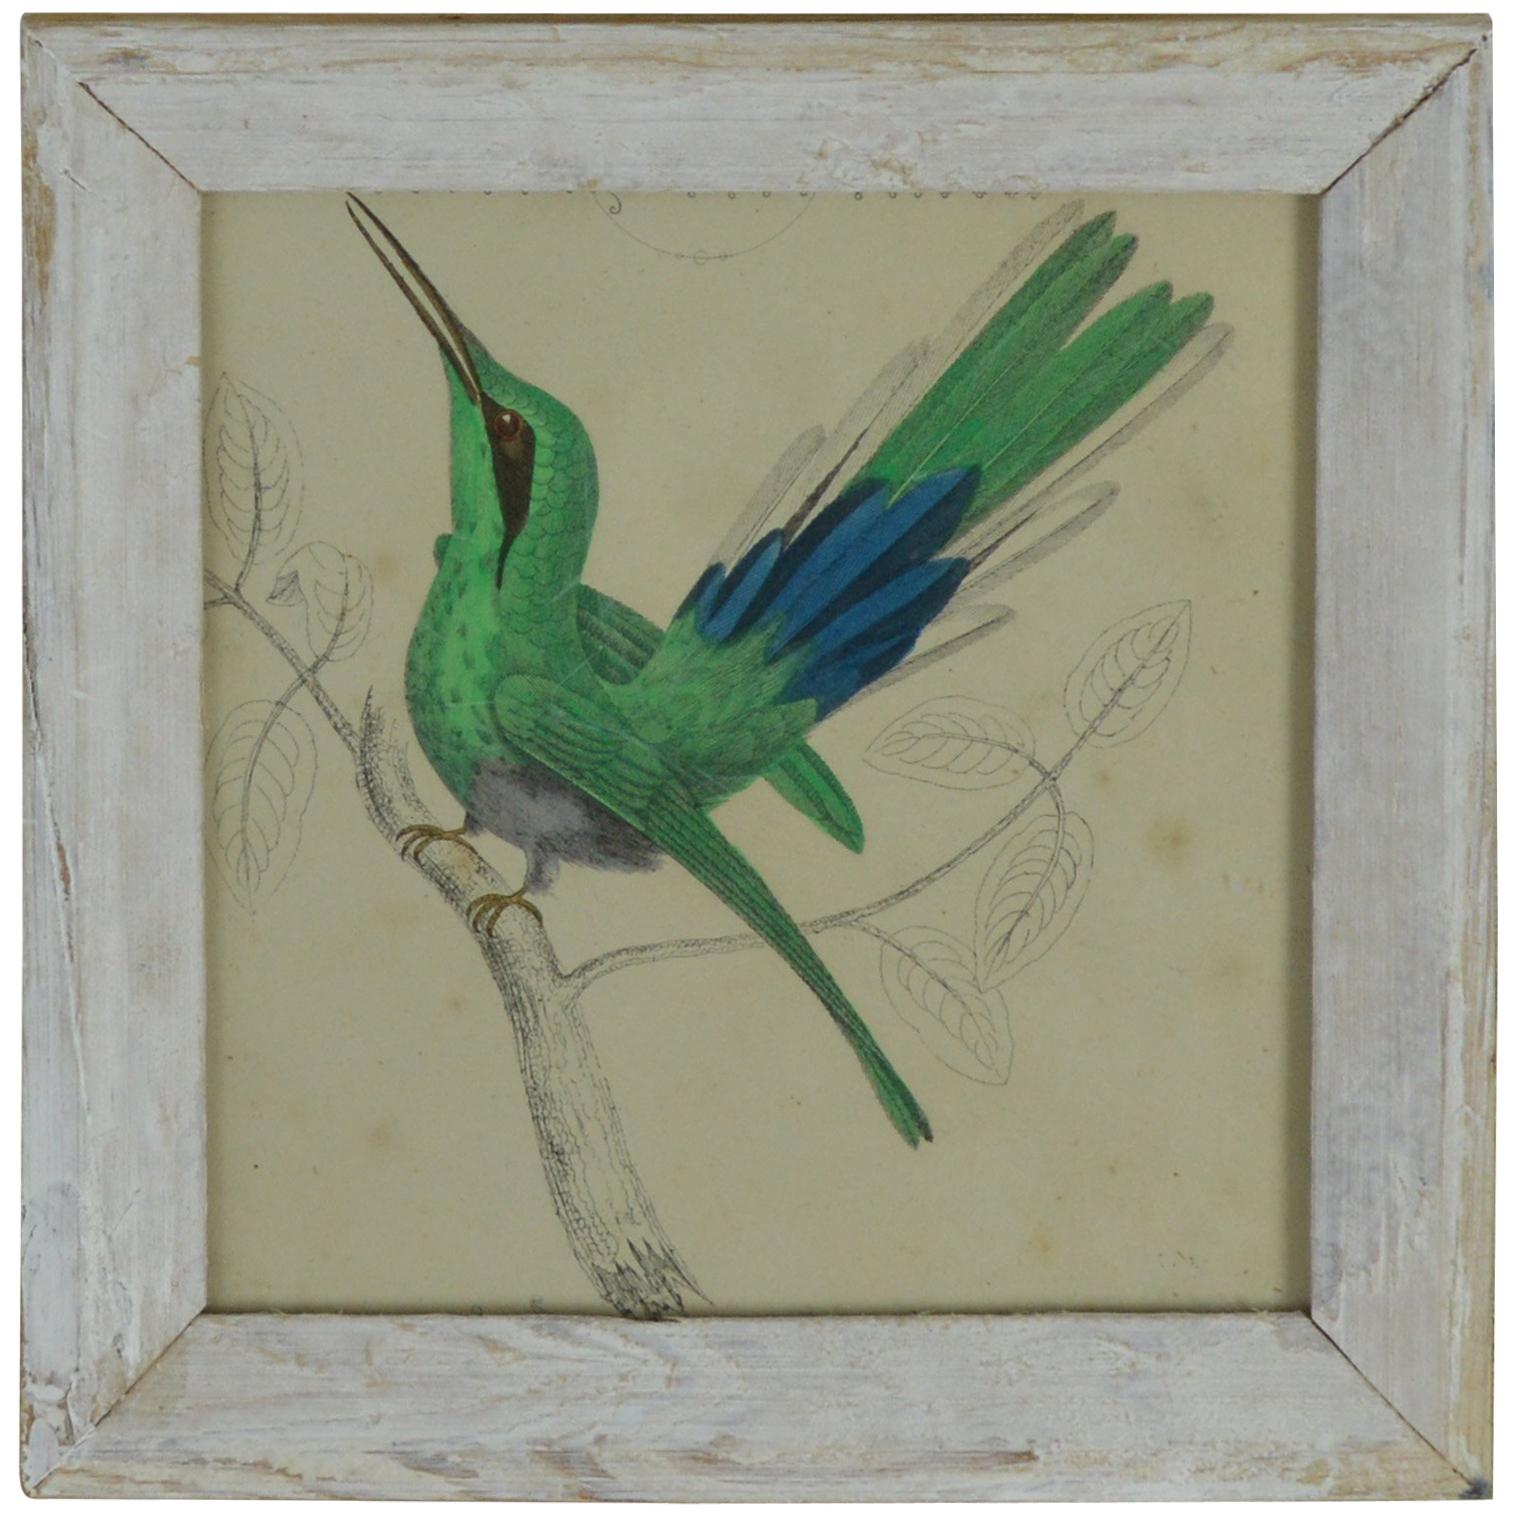 Original Antique Print of a Hummingbird, 1847